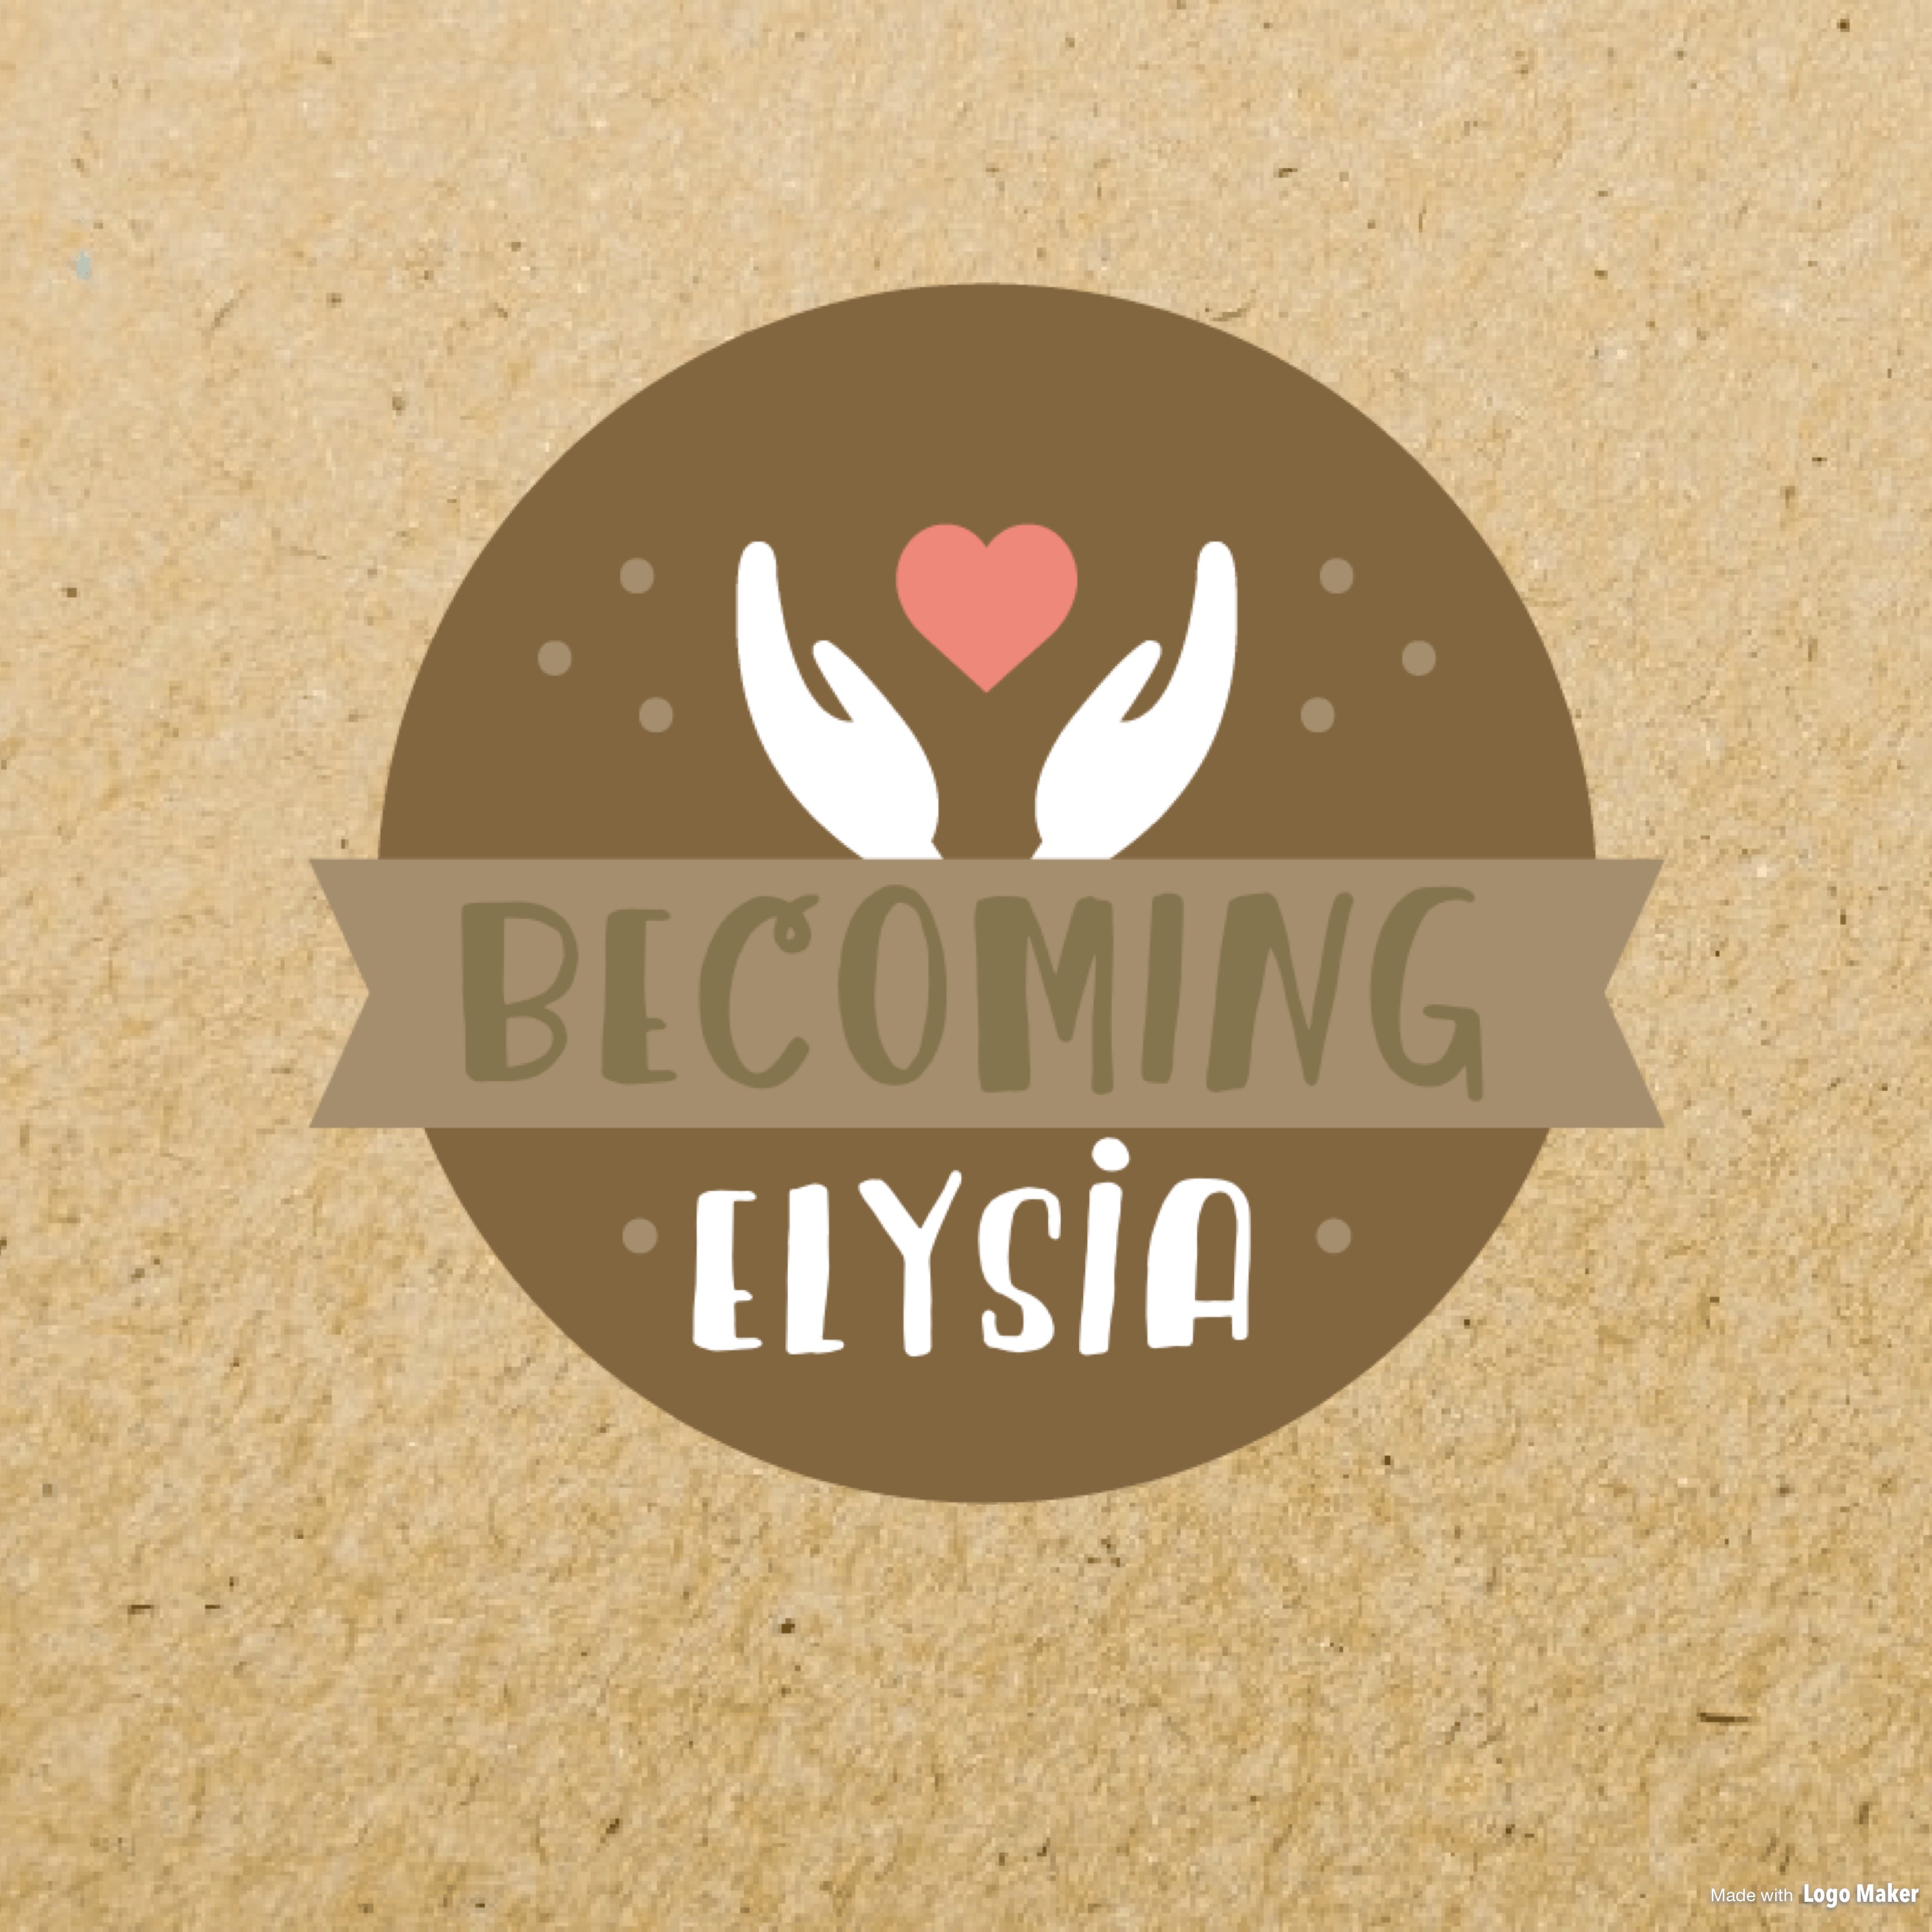 Becoming Elysia